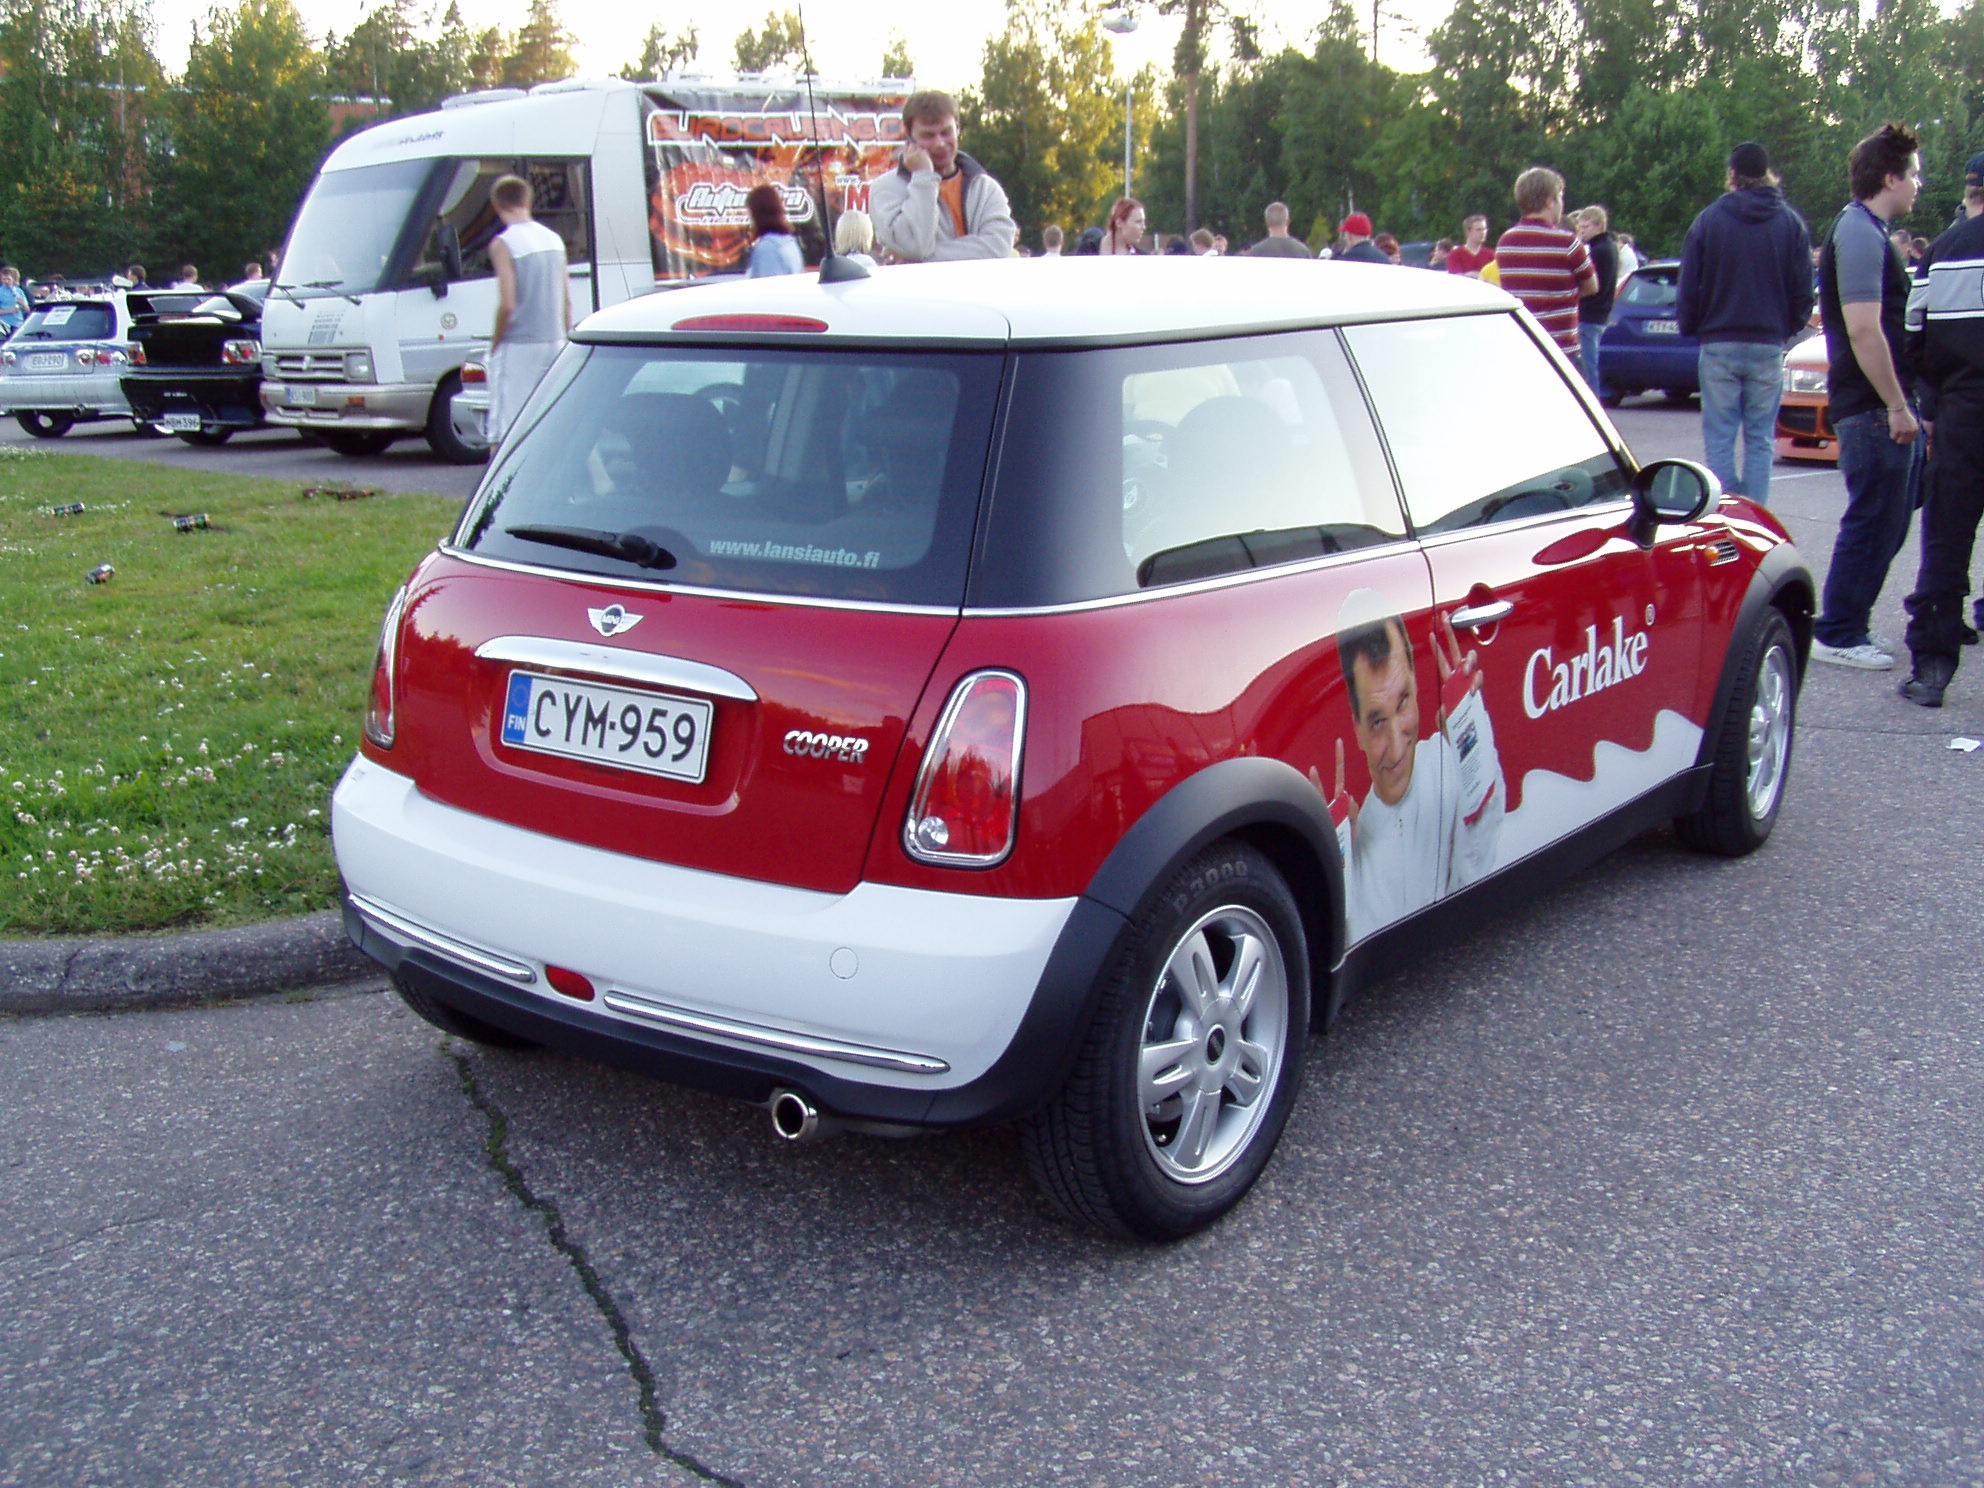 EuroCruising 1.7.2005, Mini Cooper, Carlake